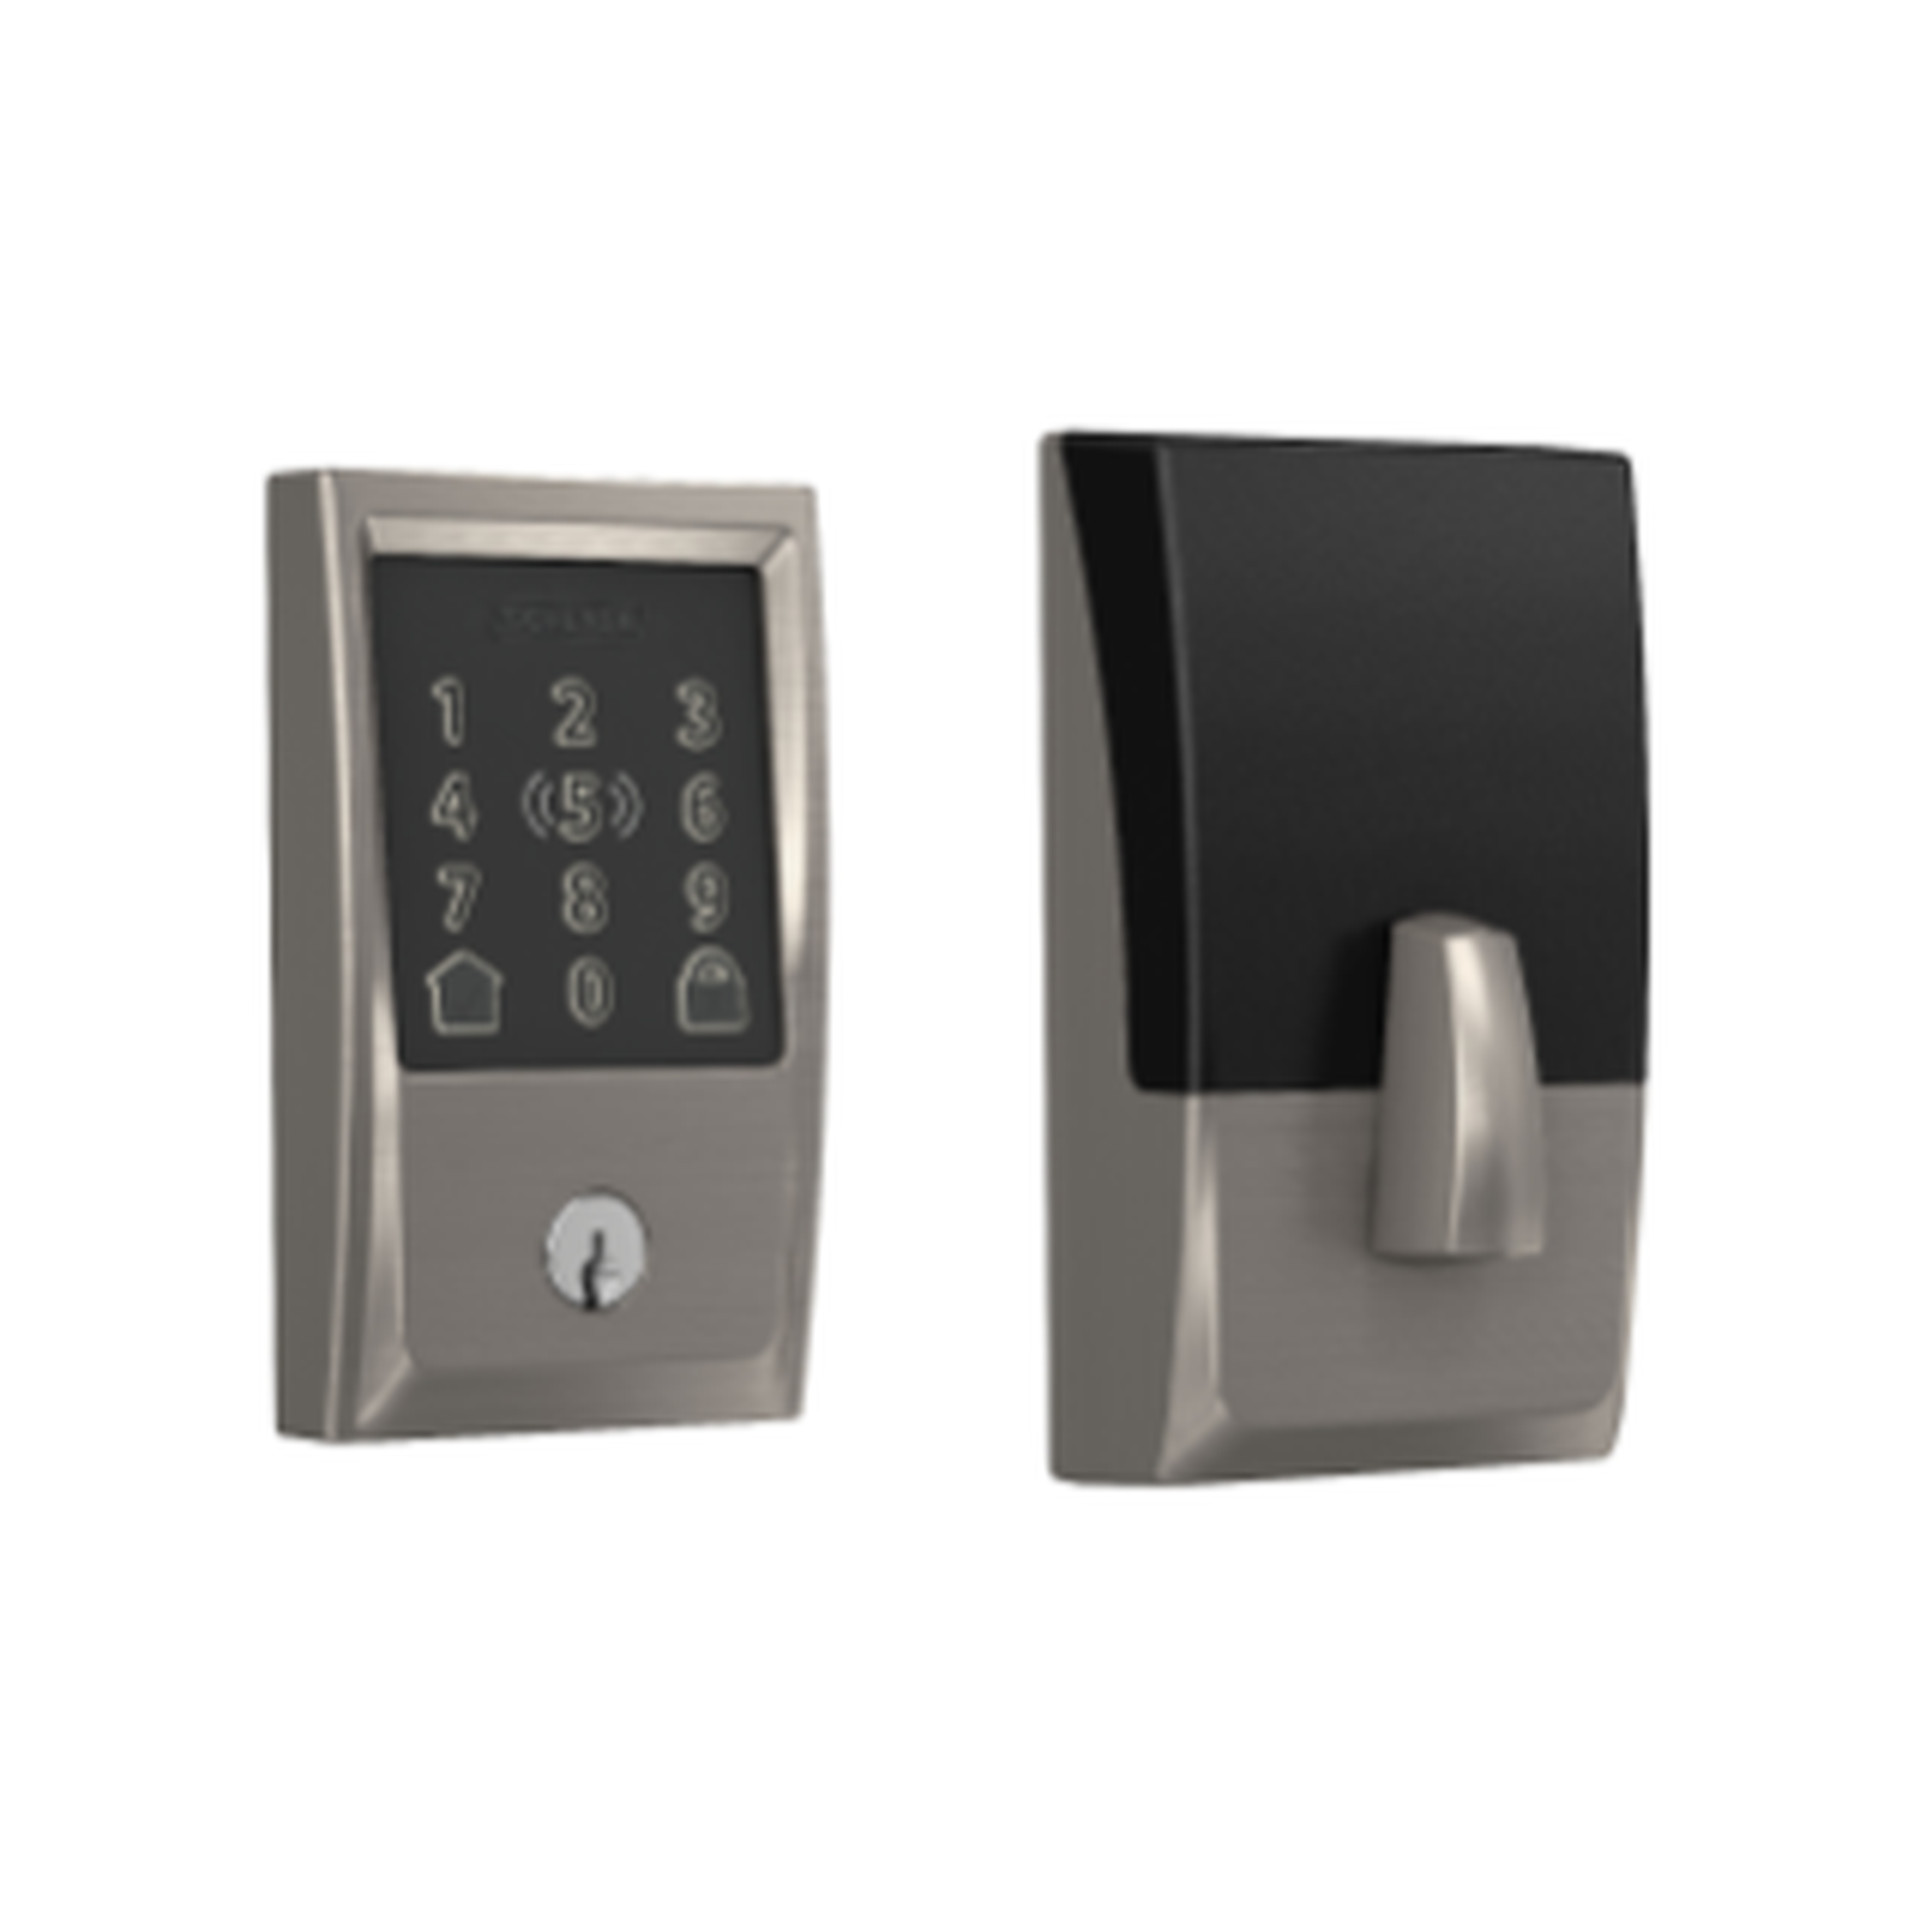 Schlage Encode Plus Smart Wifi Deadbolt Is The First Apple Home Key Compatible Smart Door Lock